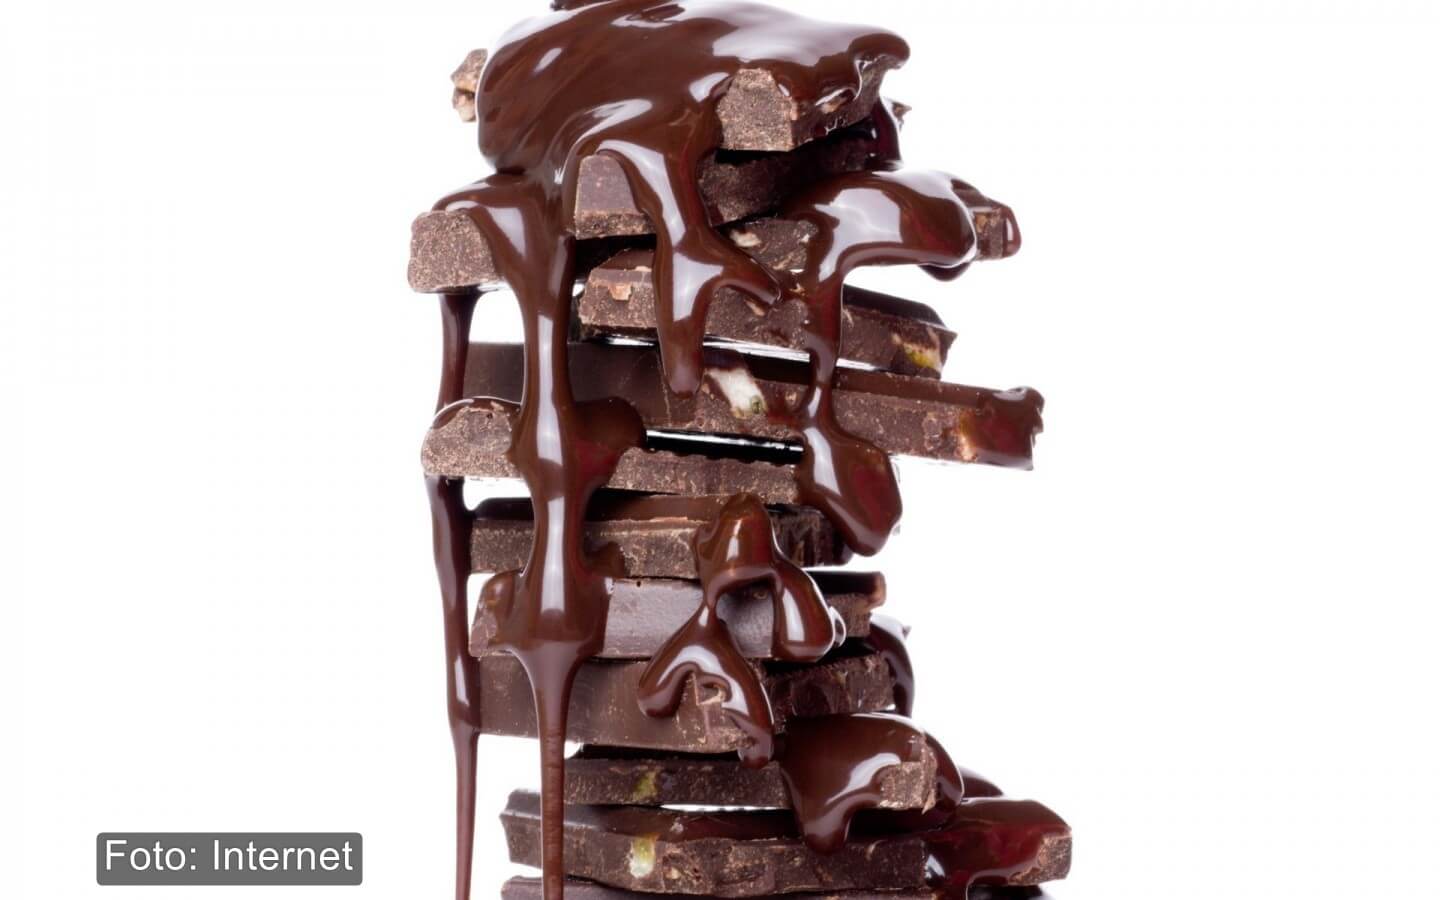 watermarked-chocolate-food-melting-900x1440